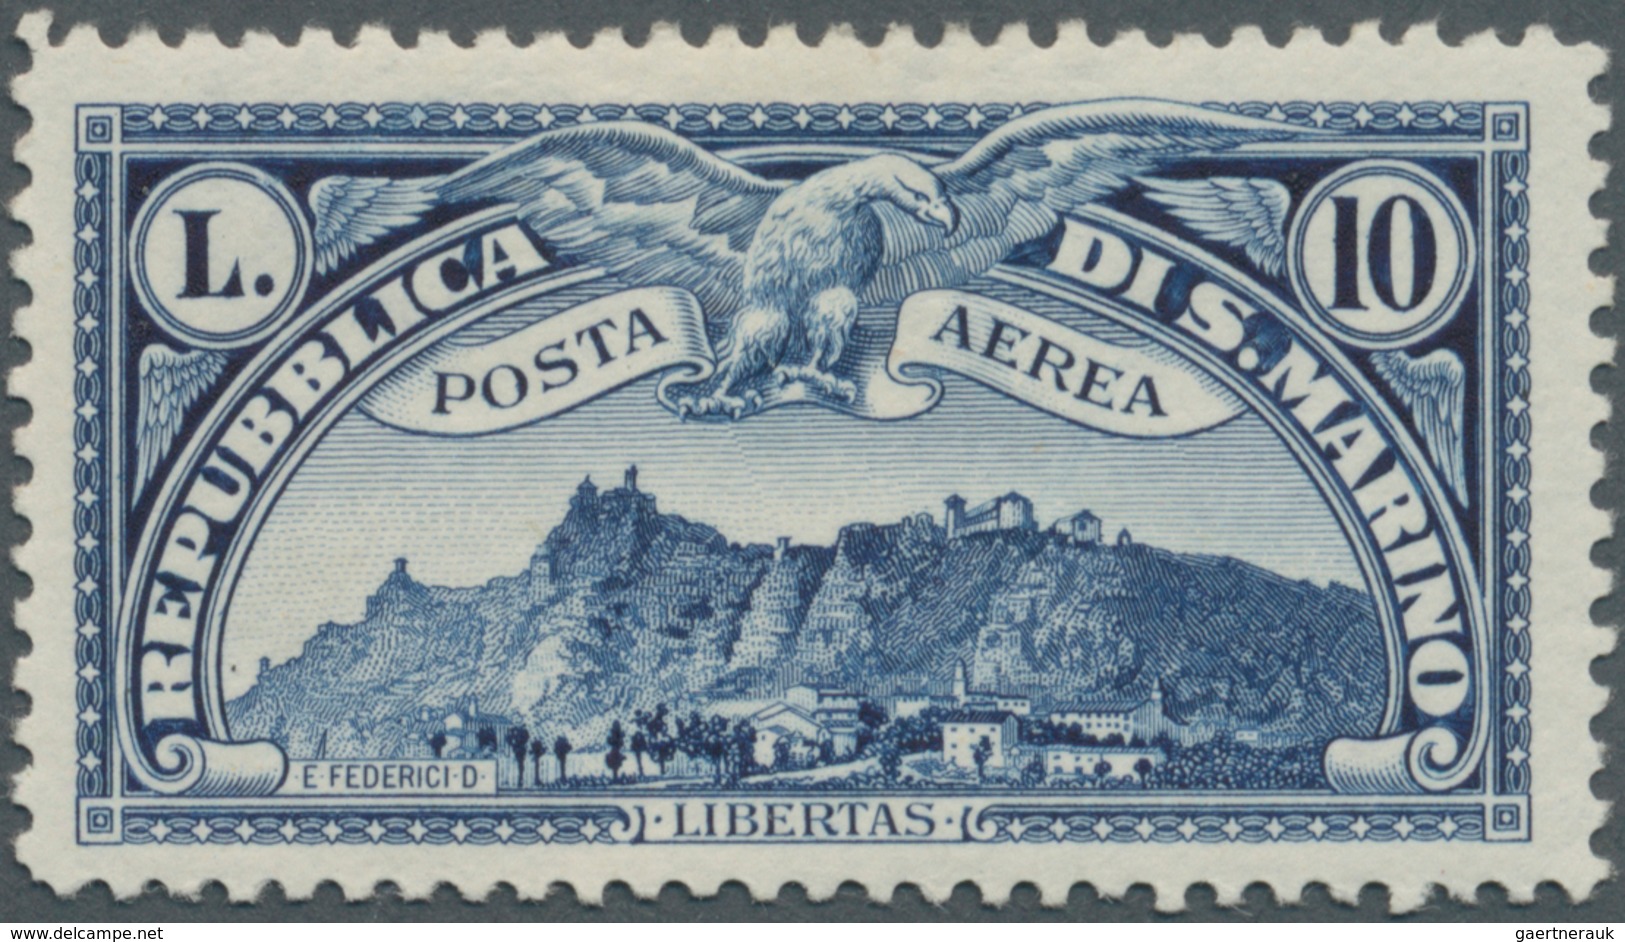 San Marino: 1931, Airmail Stamp ‚Monte Titano‘ 10l. Blue Mint Lightly Hinged, Very Scarce Stamp! Mi. - Neufs